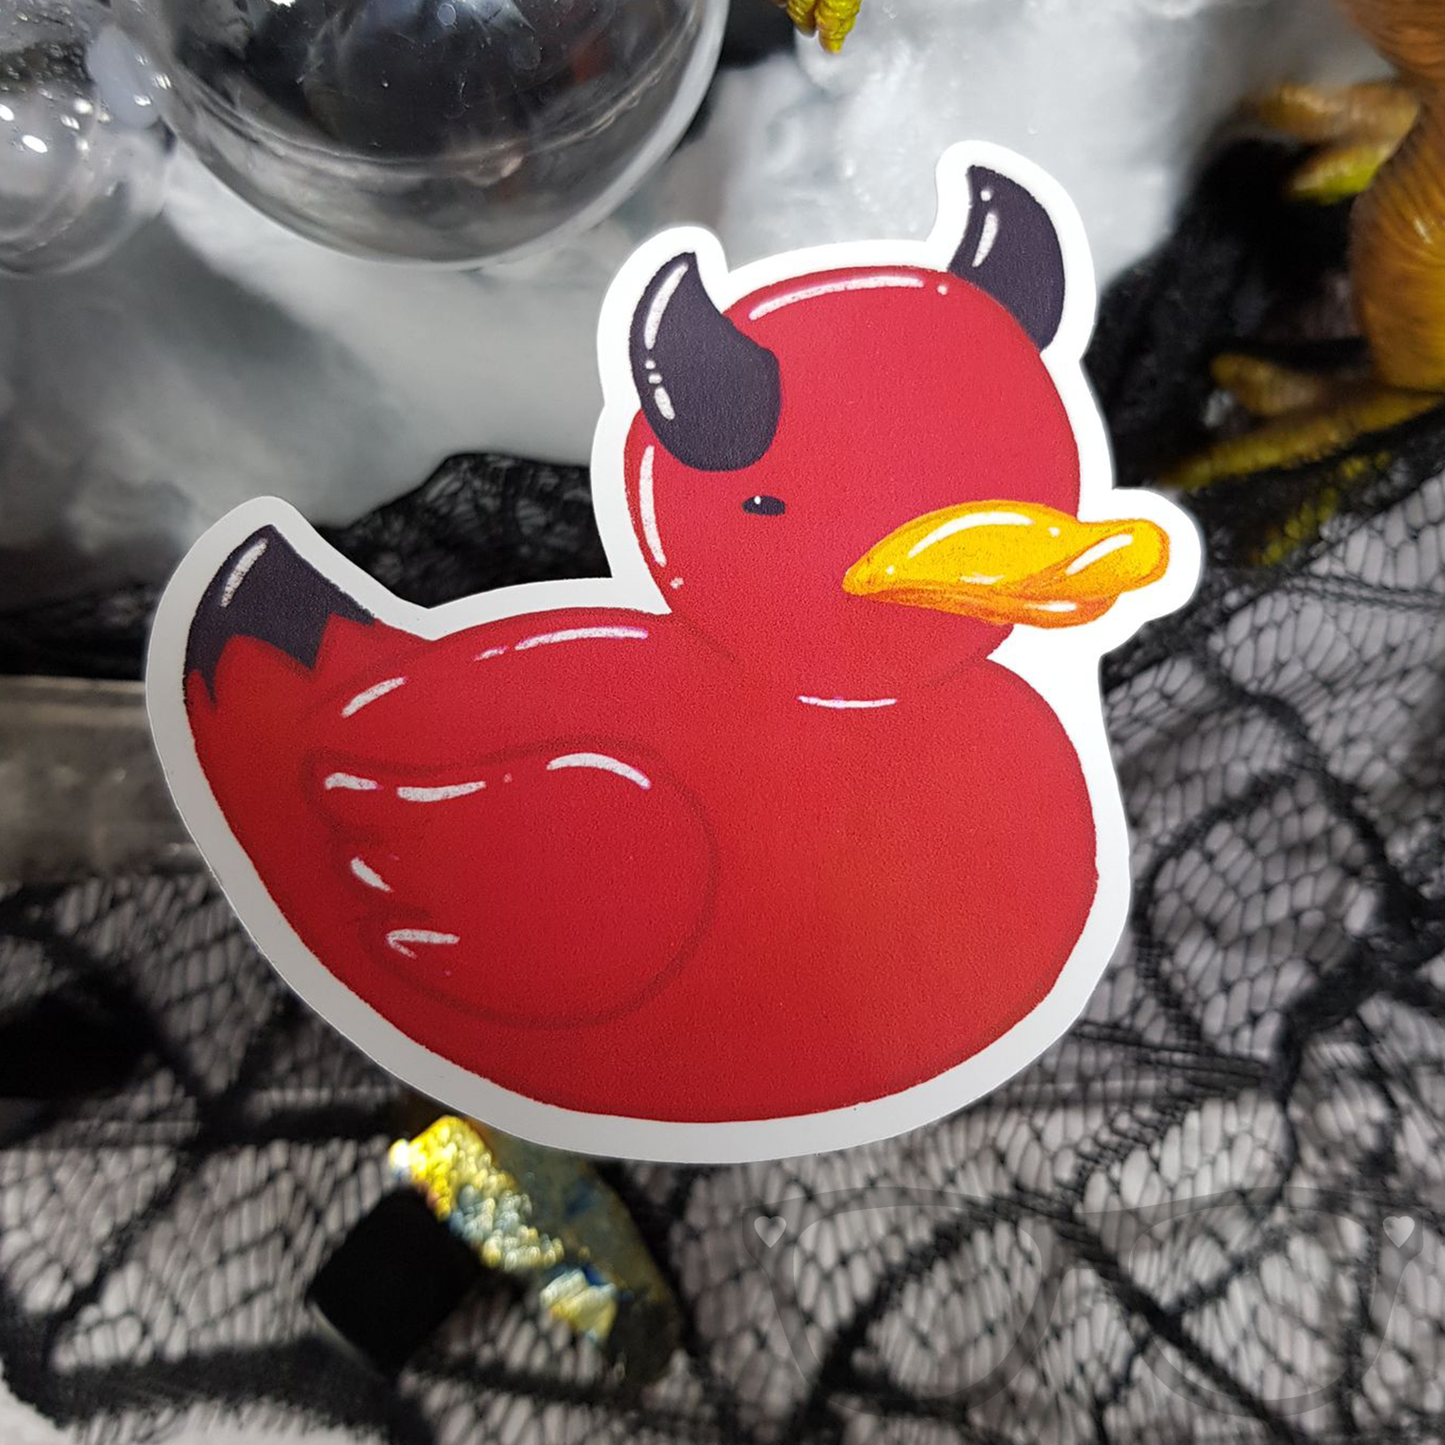 Beelzeduck red rubber ducky with devil horns vinyl sticker.